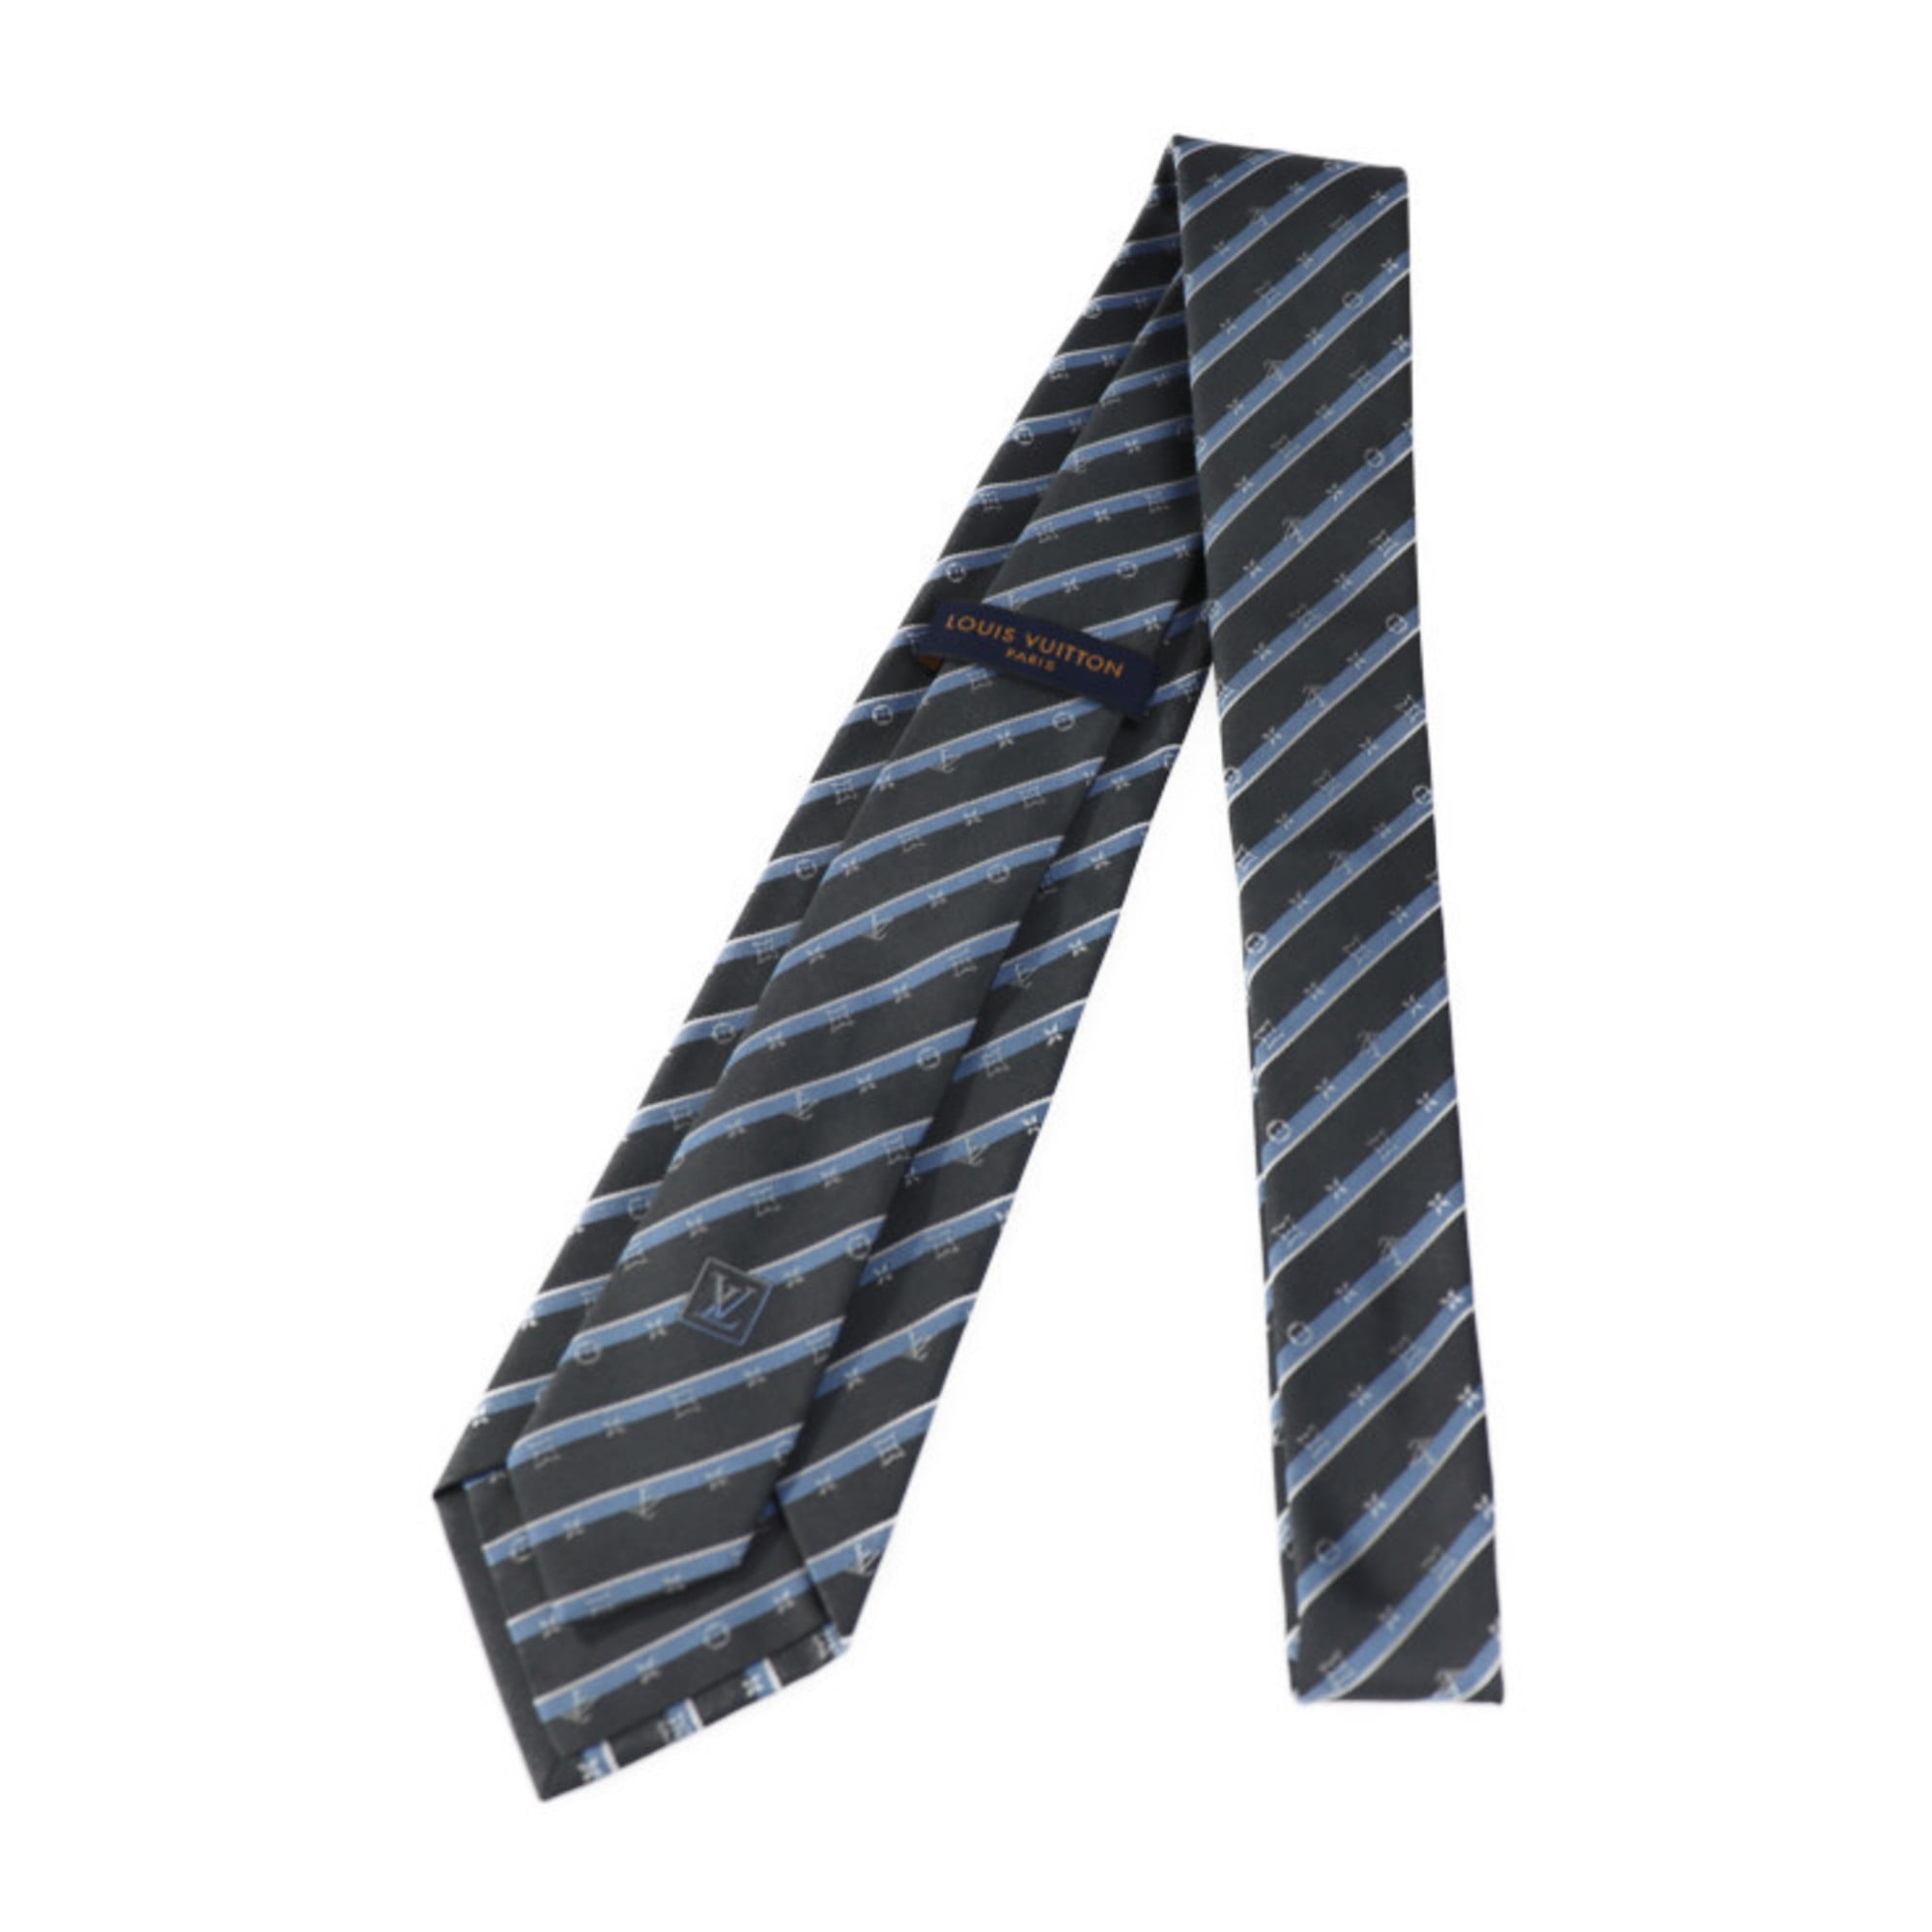 Authenticated used Louis Vuitton Louis Vuitton Cravat Monogram Ribbon Tie M71726 Silk Gray Series Blue Stripe Overall Pattern Logo, Men's, Size: Width